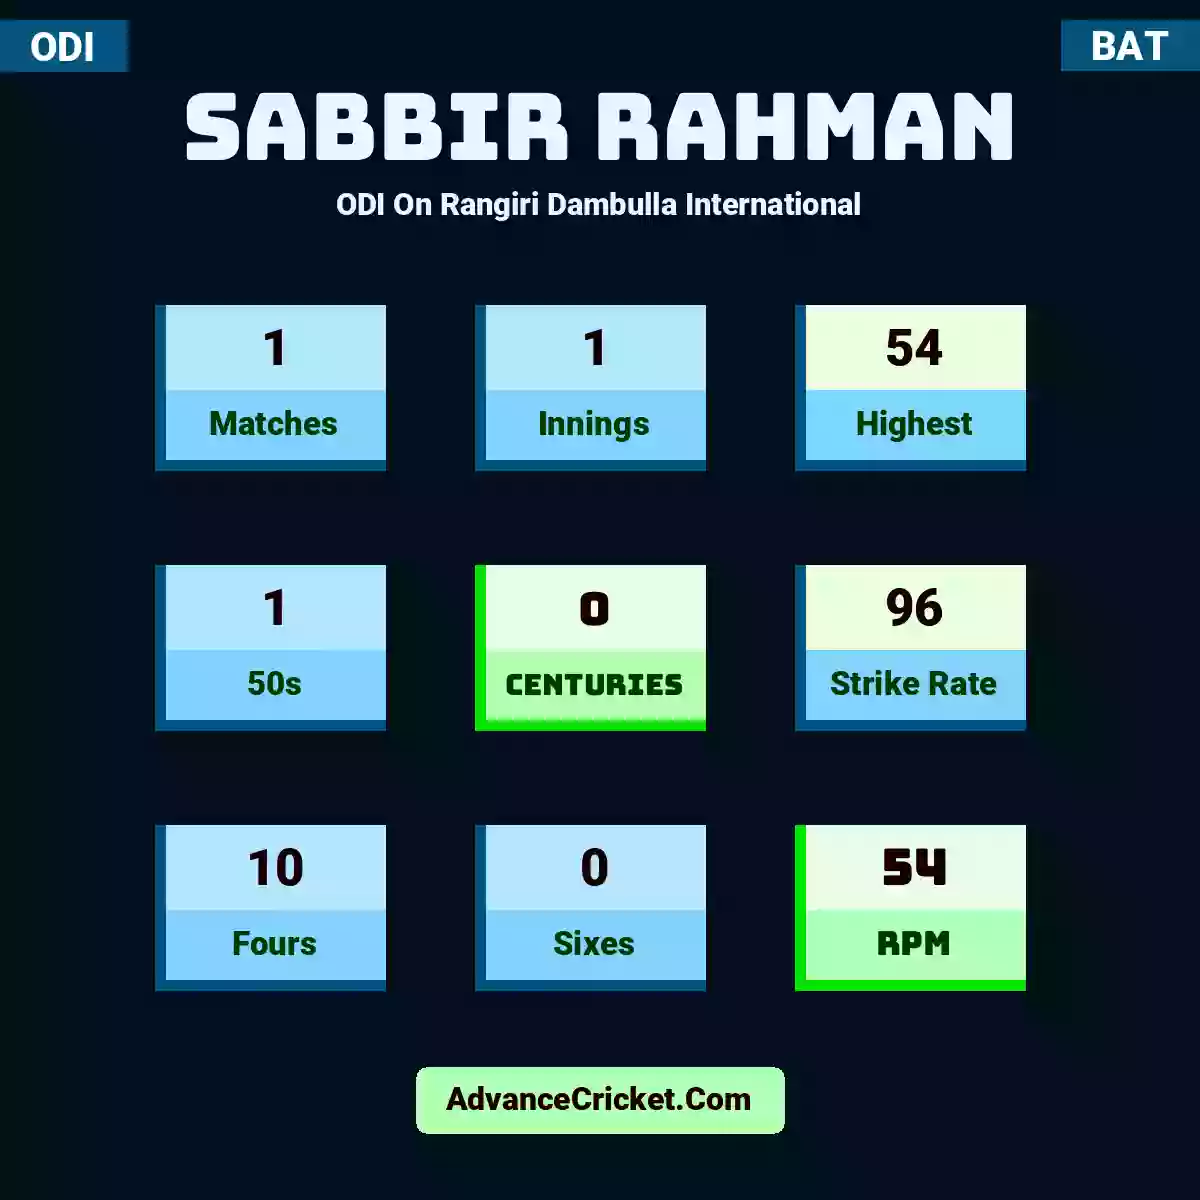 Sabbir Rahman ODI  On Rangiri Dambulla International, Sabbir Rahman played 1 matches, scored 54 runs as highest, 1 half-centuries, and 0 centuries, with a strike rate of 96. S.Rahman hit 10 fours and 0 sixes, with an RPM of 54.